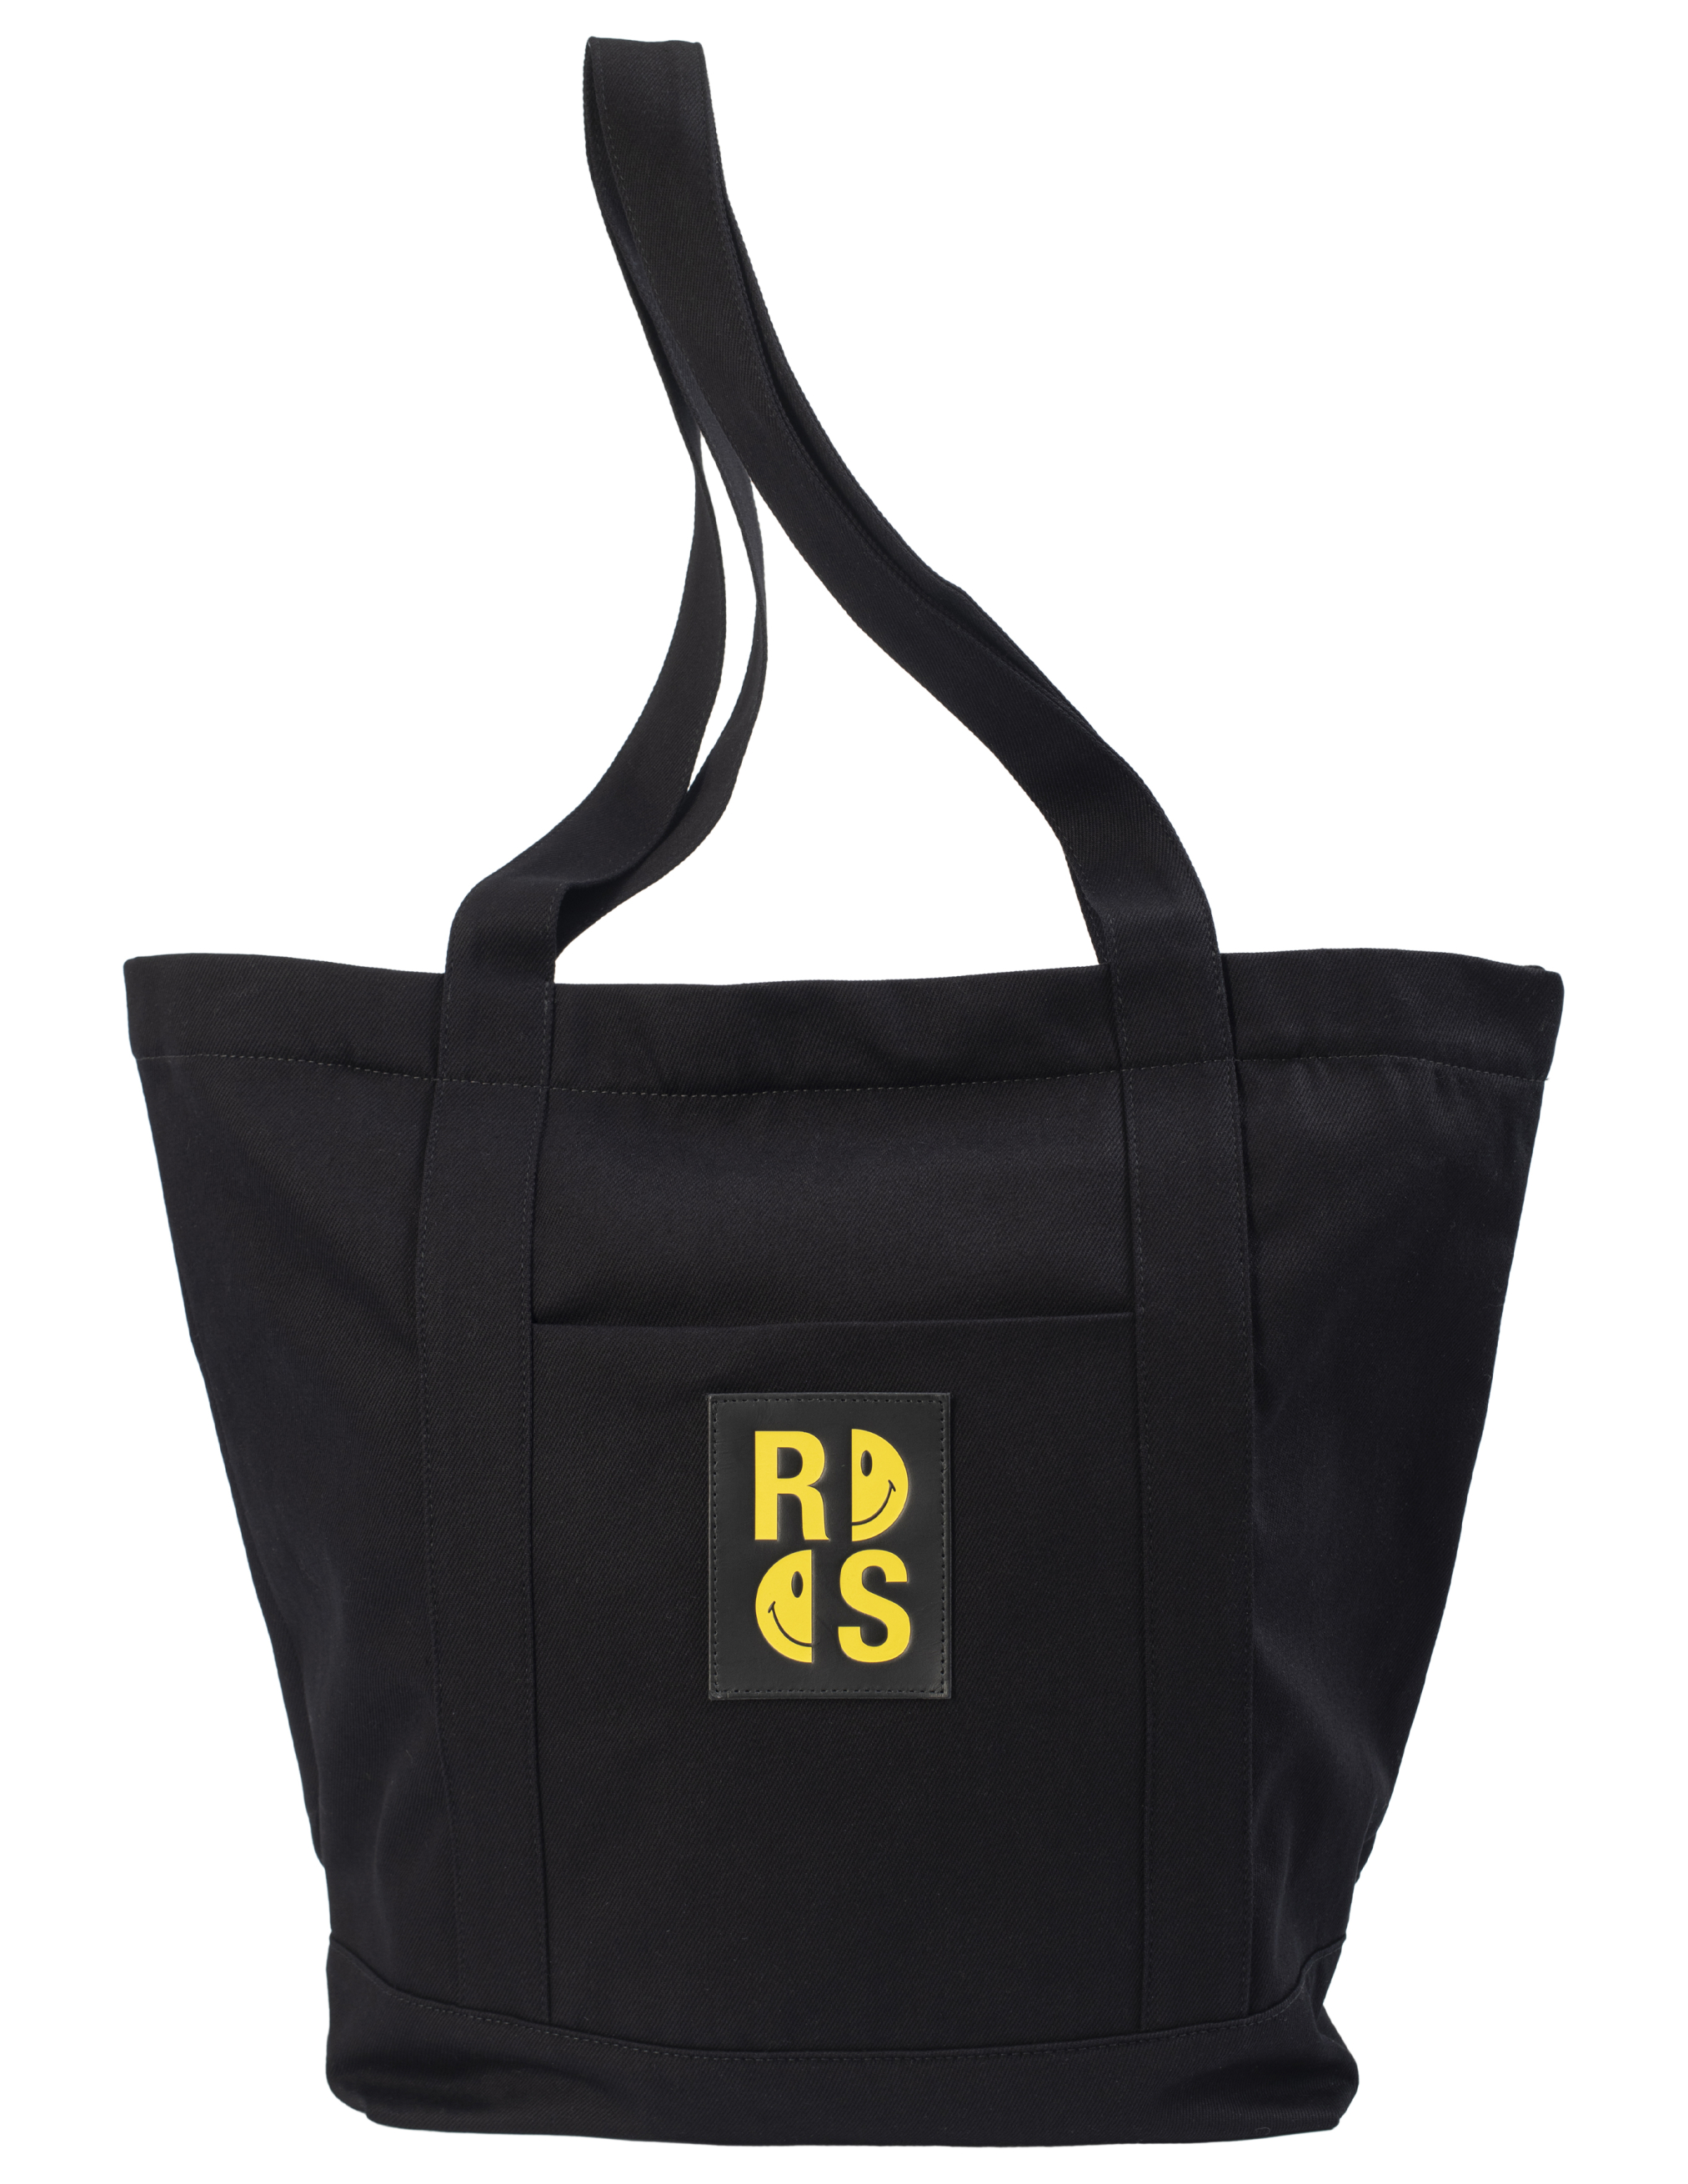 Джинсовая сумка-шоппер Raf Simons x Smiley с патчем Raf Simons 224-935-11000-0099, размер One Size